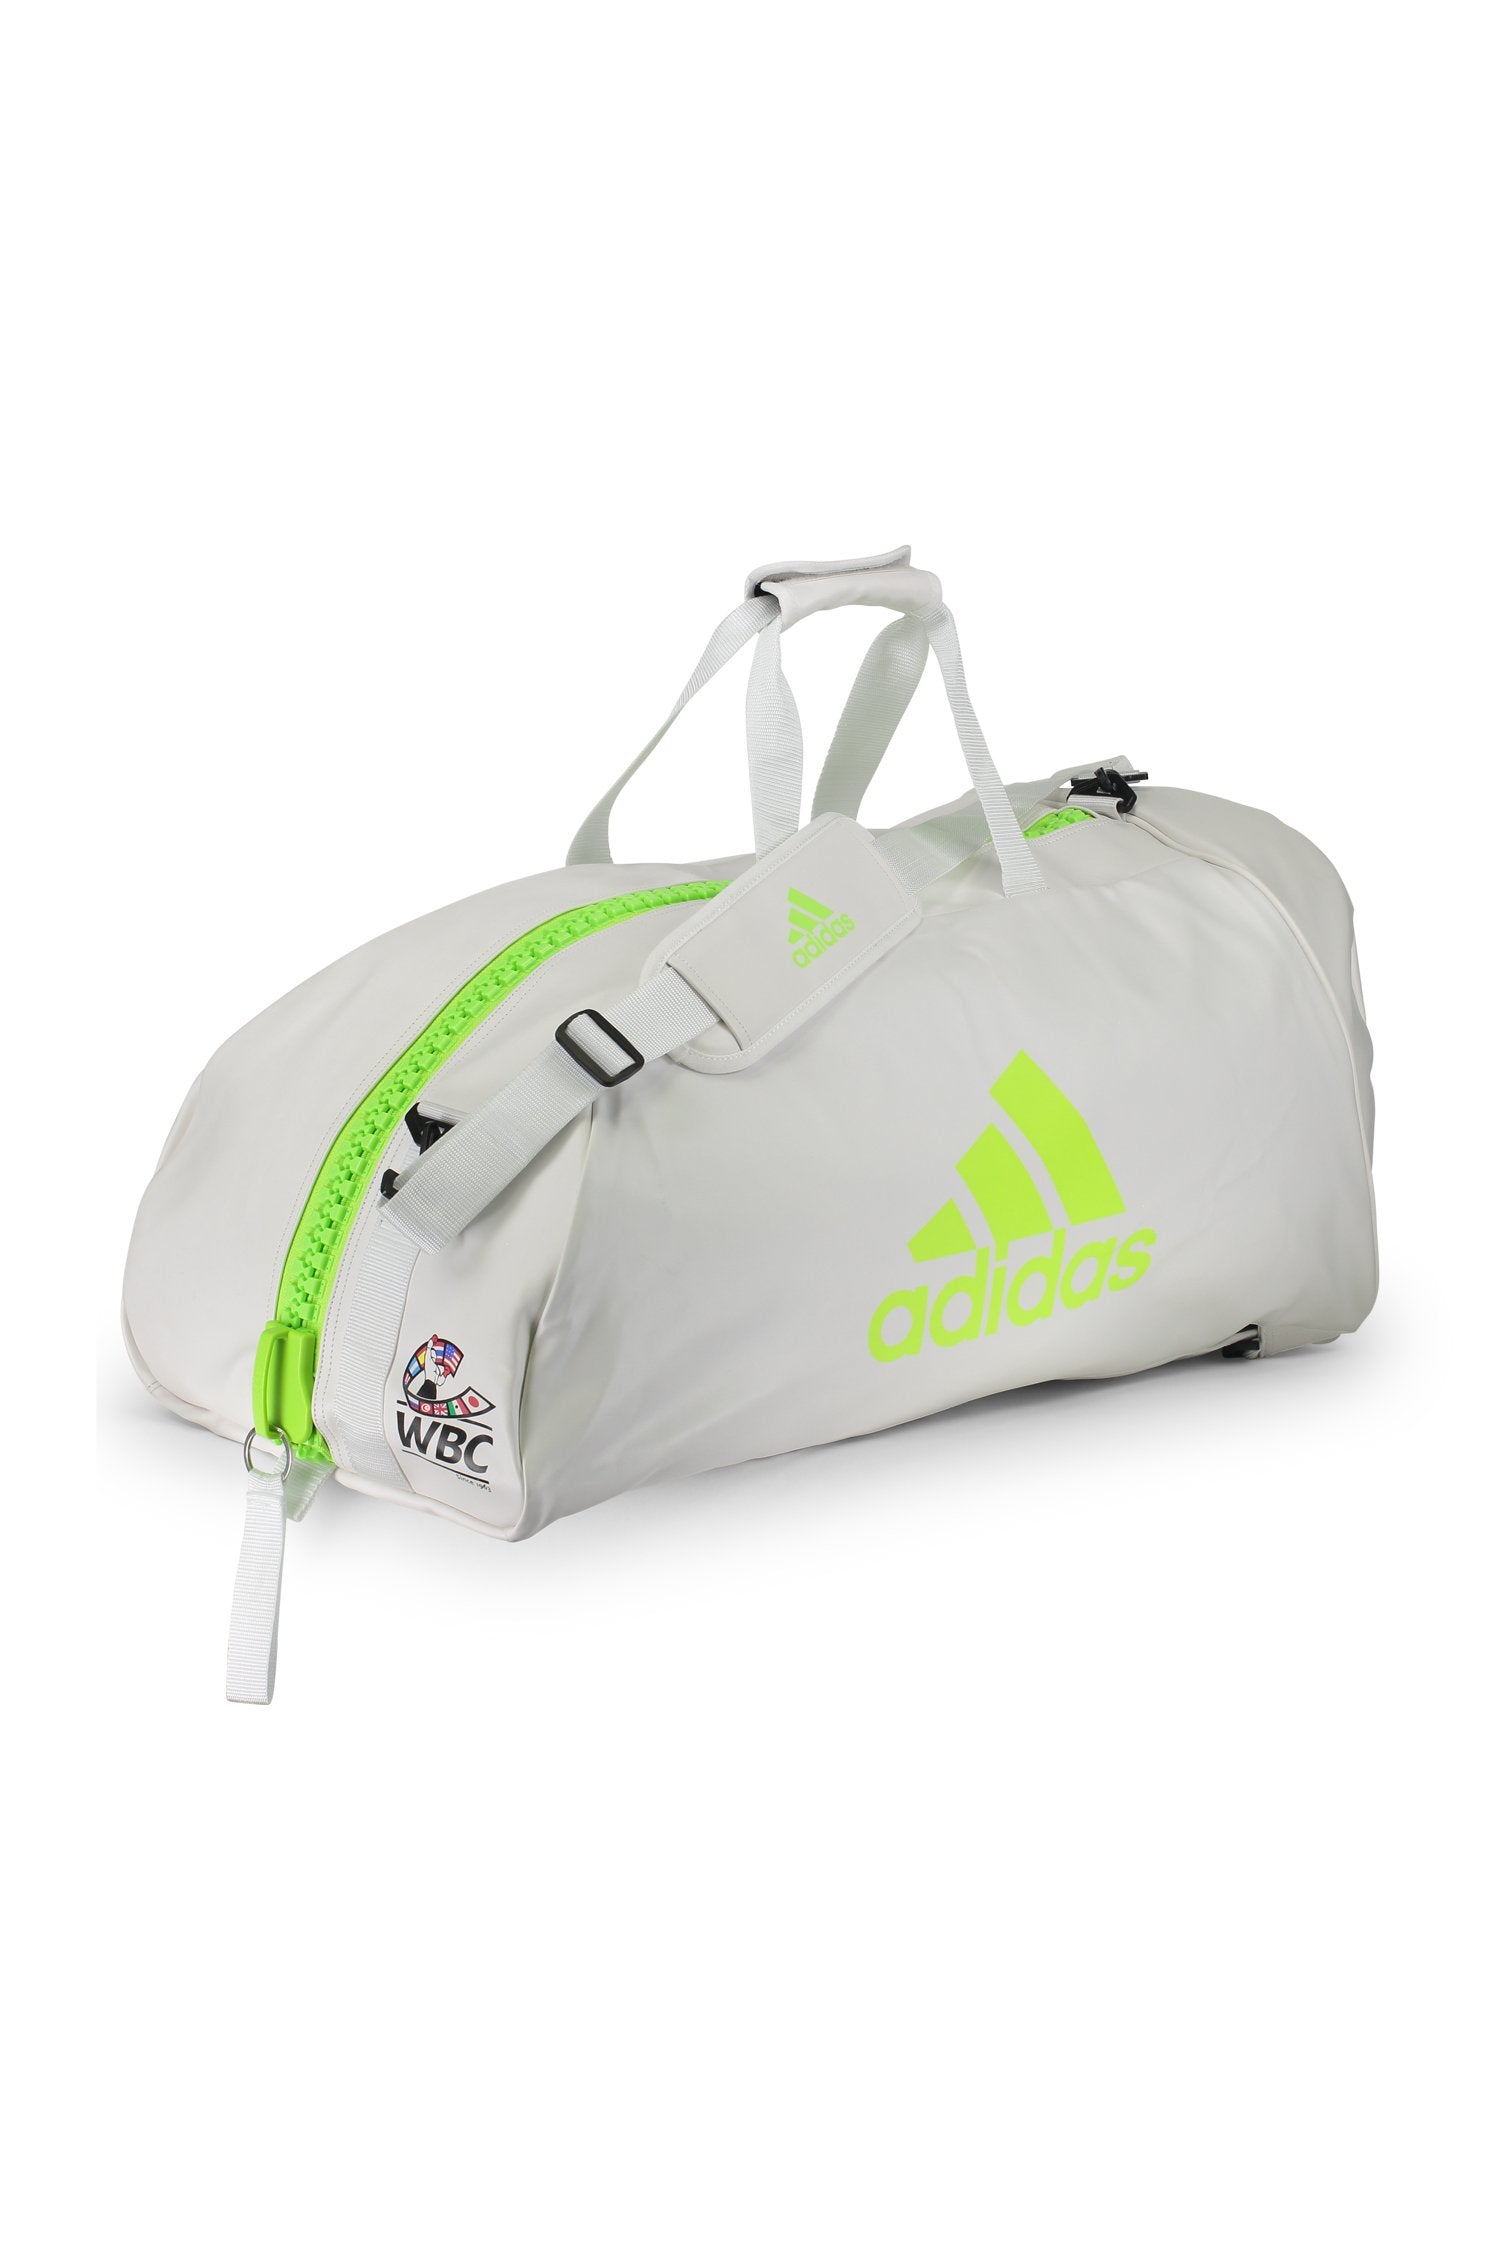 Adidas Bags WBC/Adidas Gym & Travel Bag